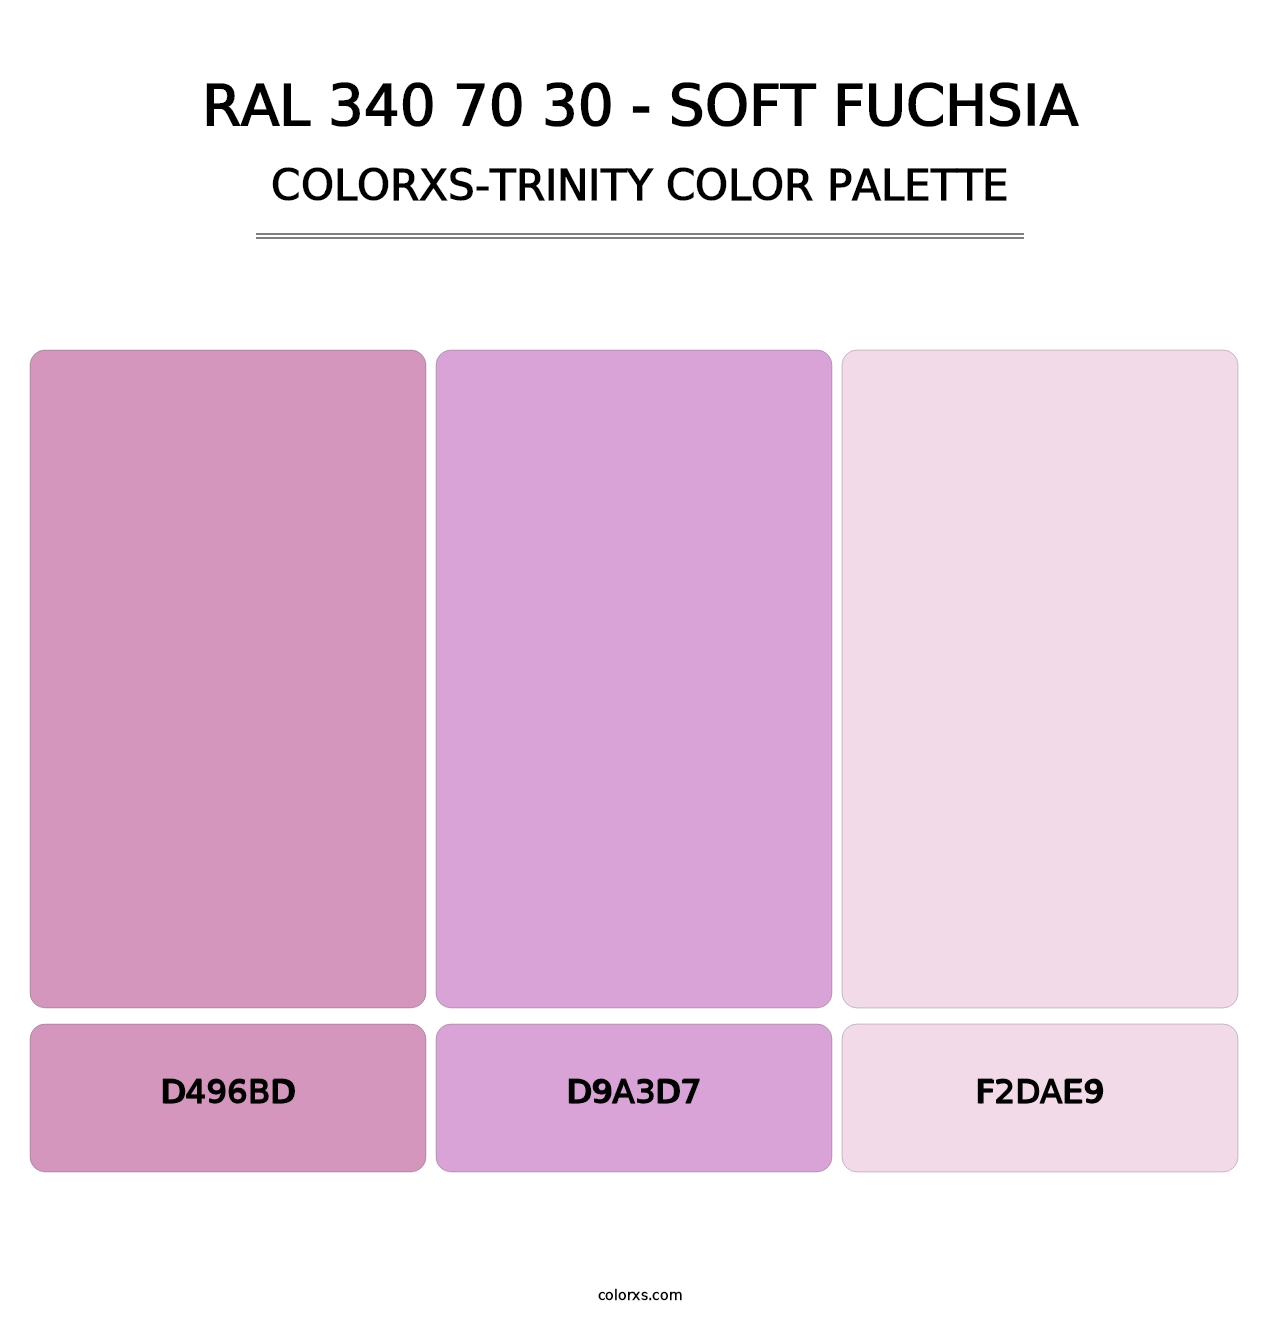 RAL 340 70 30 - Soft Fuchsia - Colorxs Trinity Palette